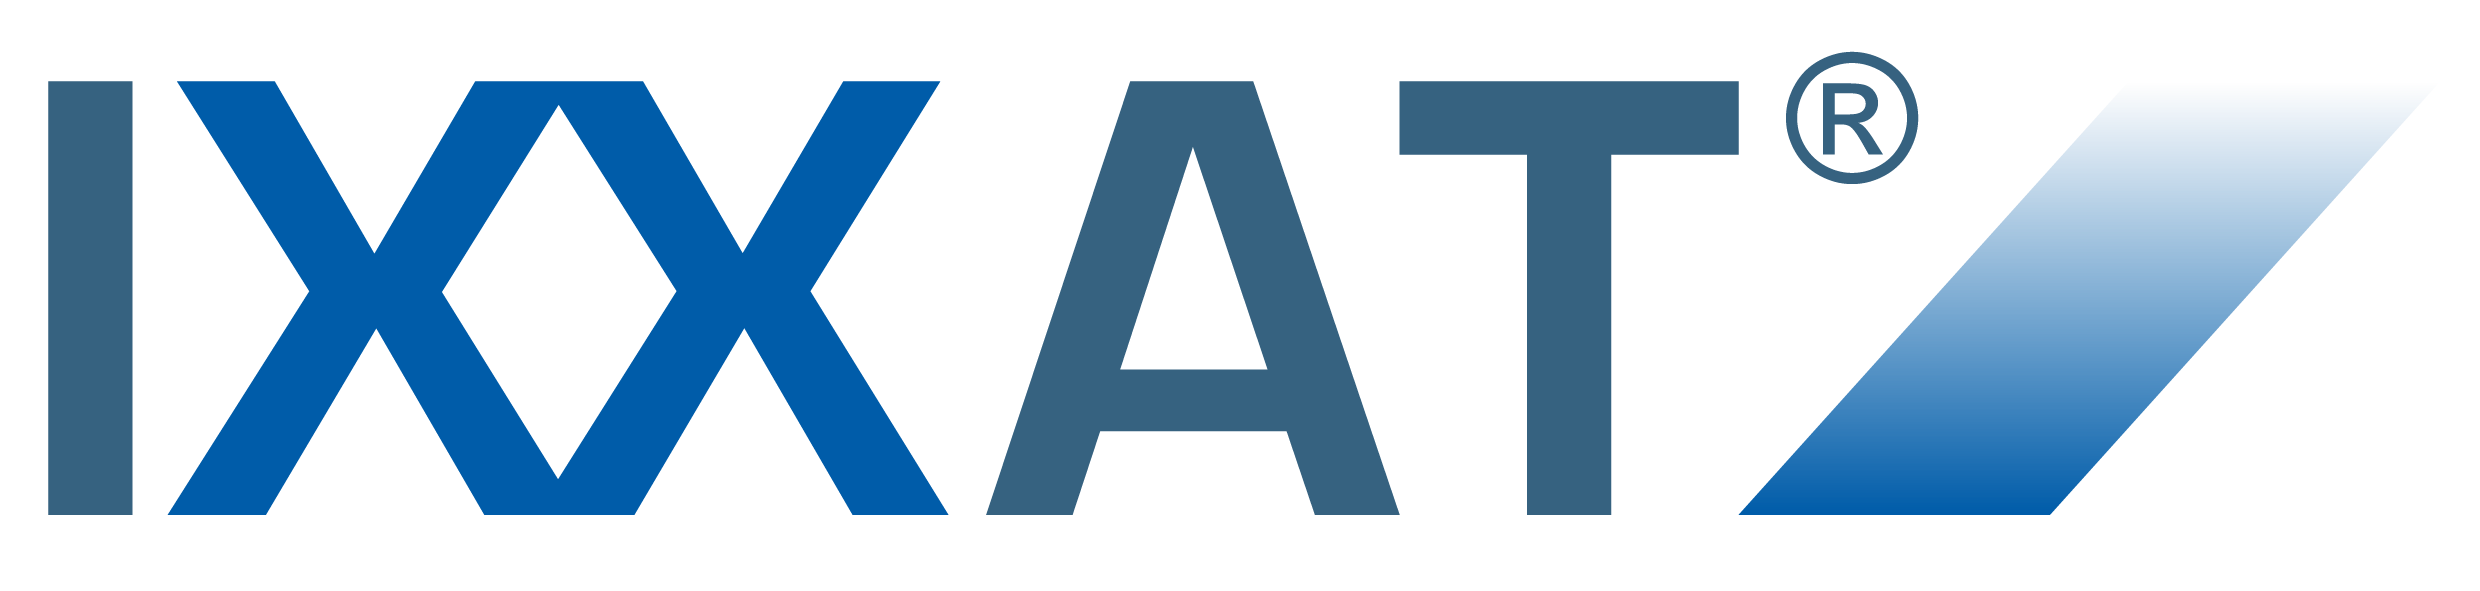 IXXAT logo